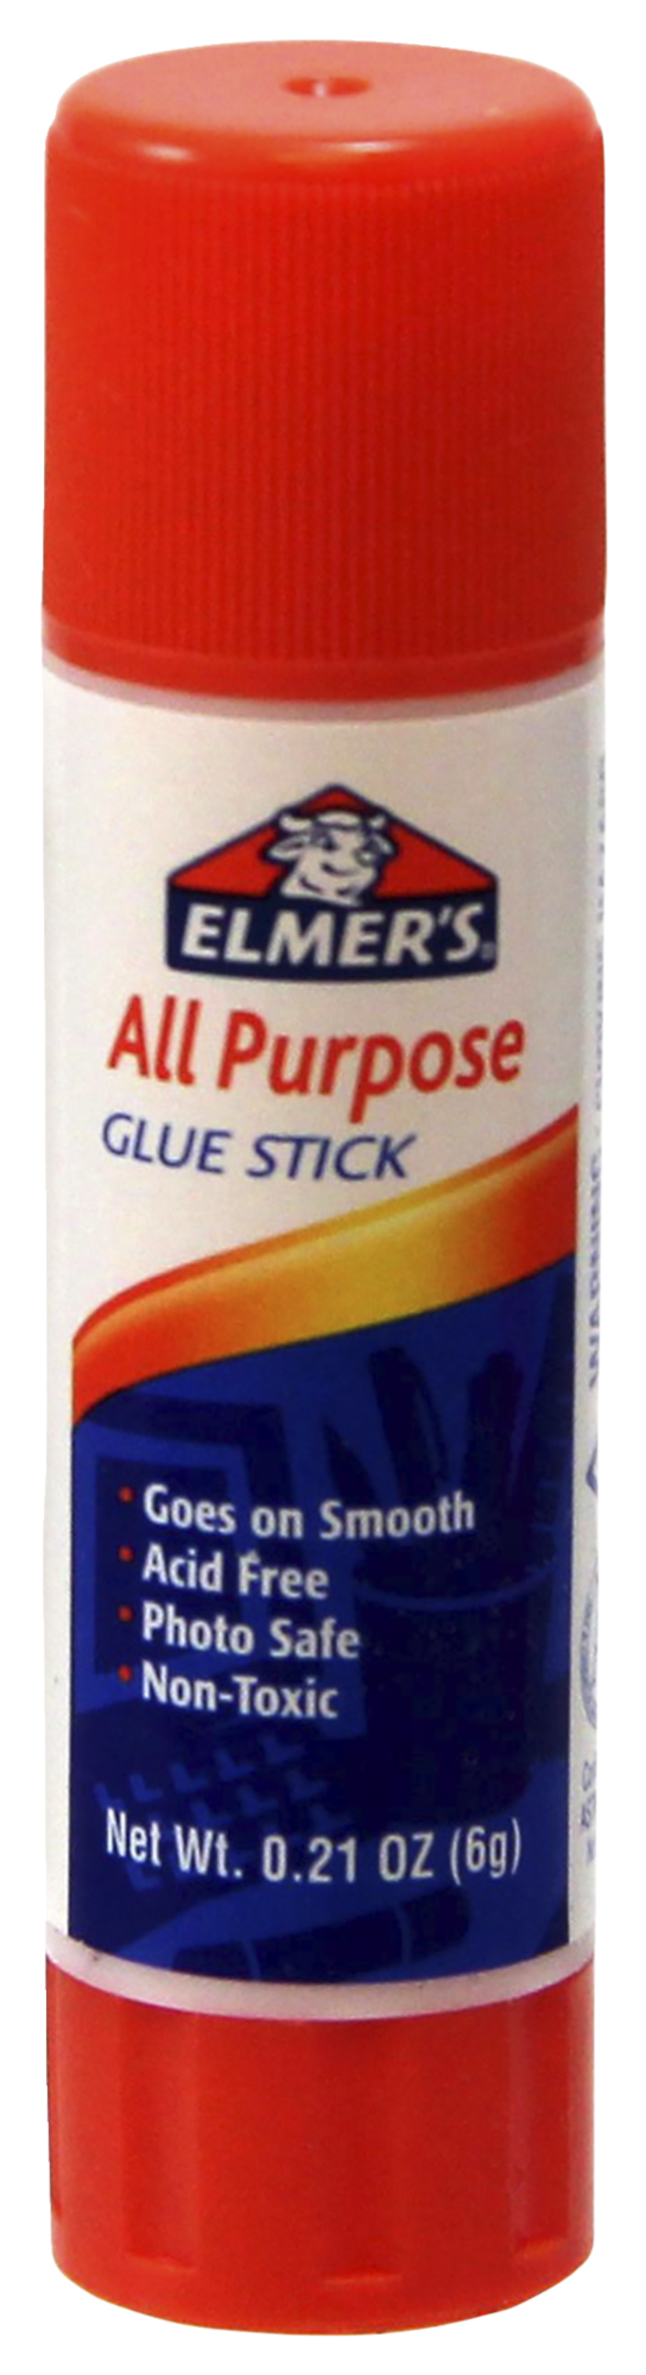 Elmer's School Glue Sticks, Disappearing Purple - 4 pack, 0.24 oz each